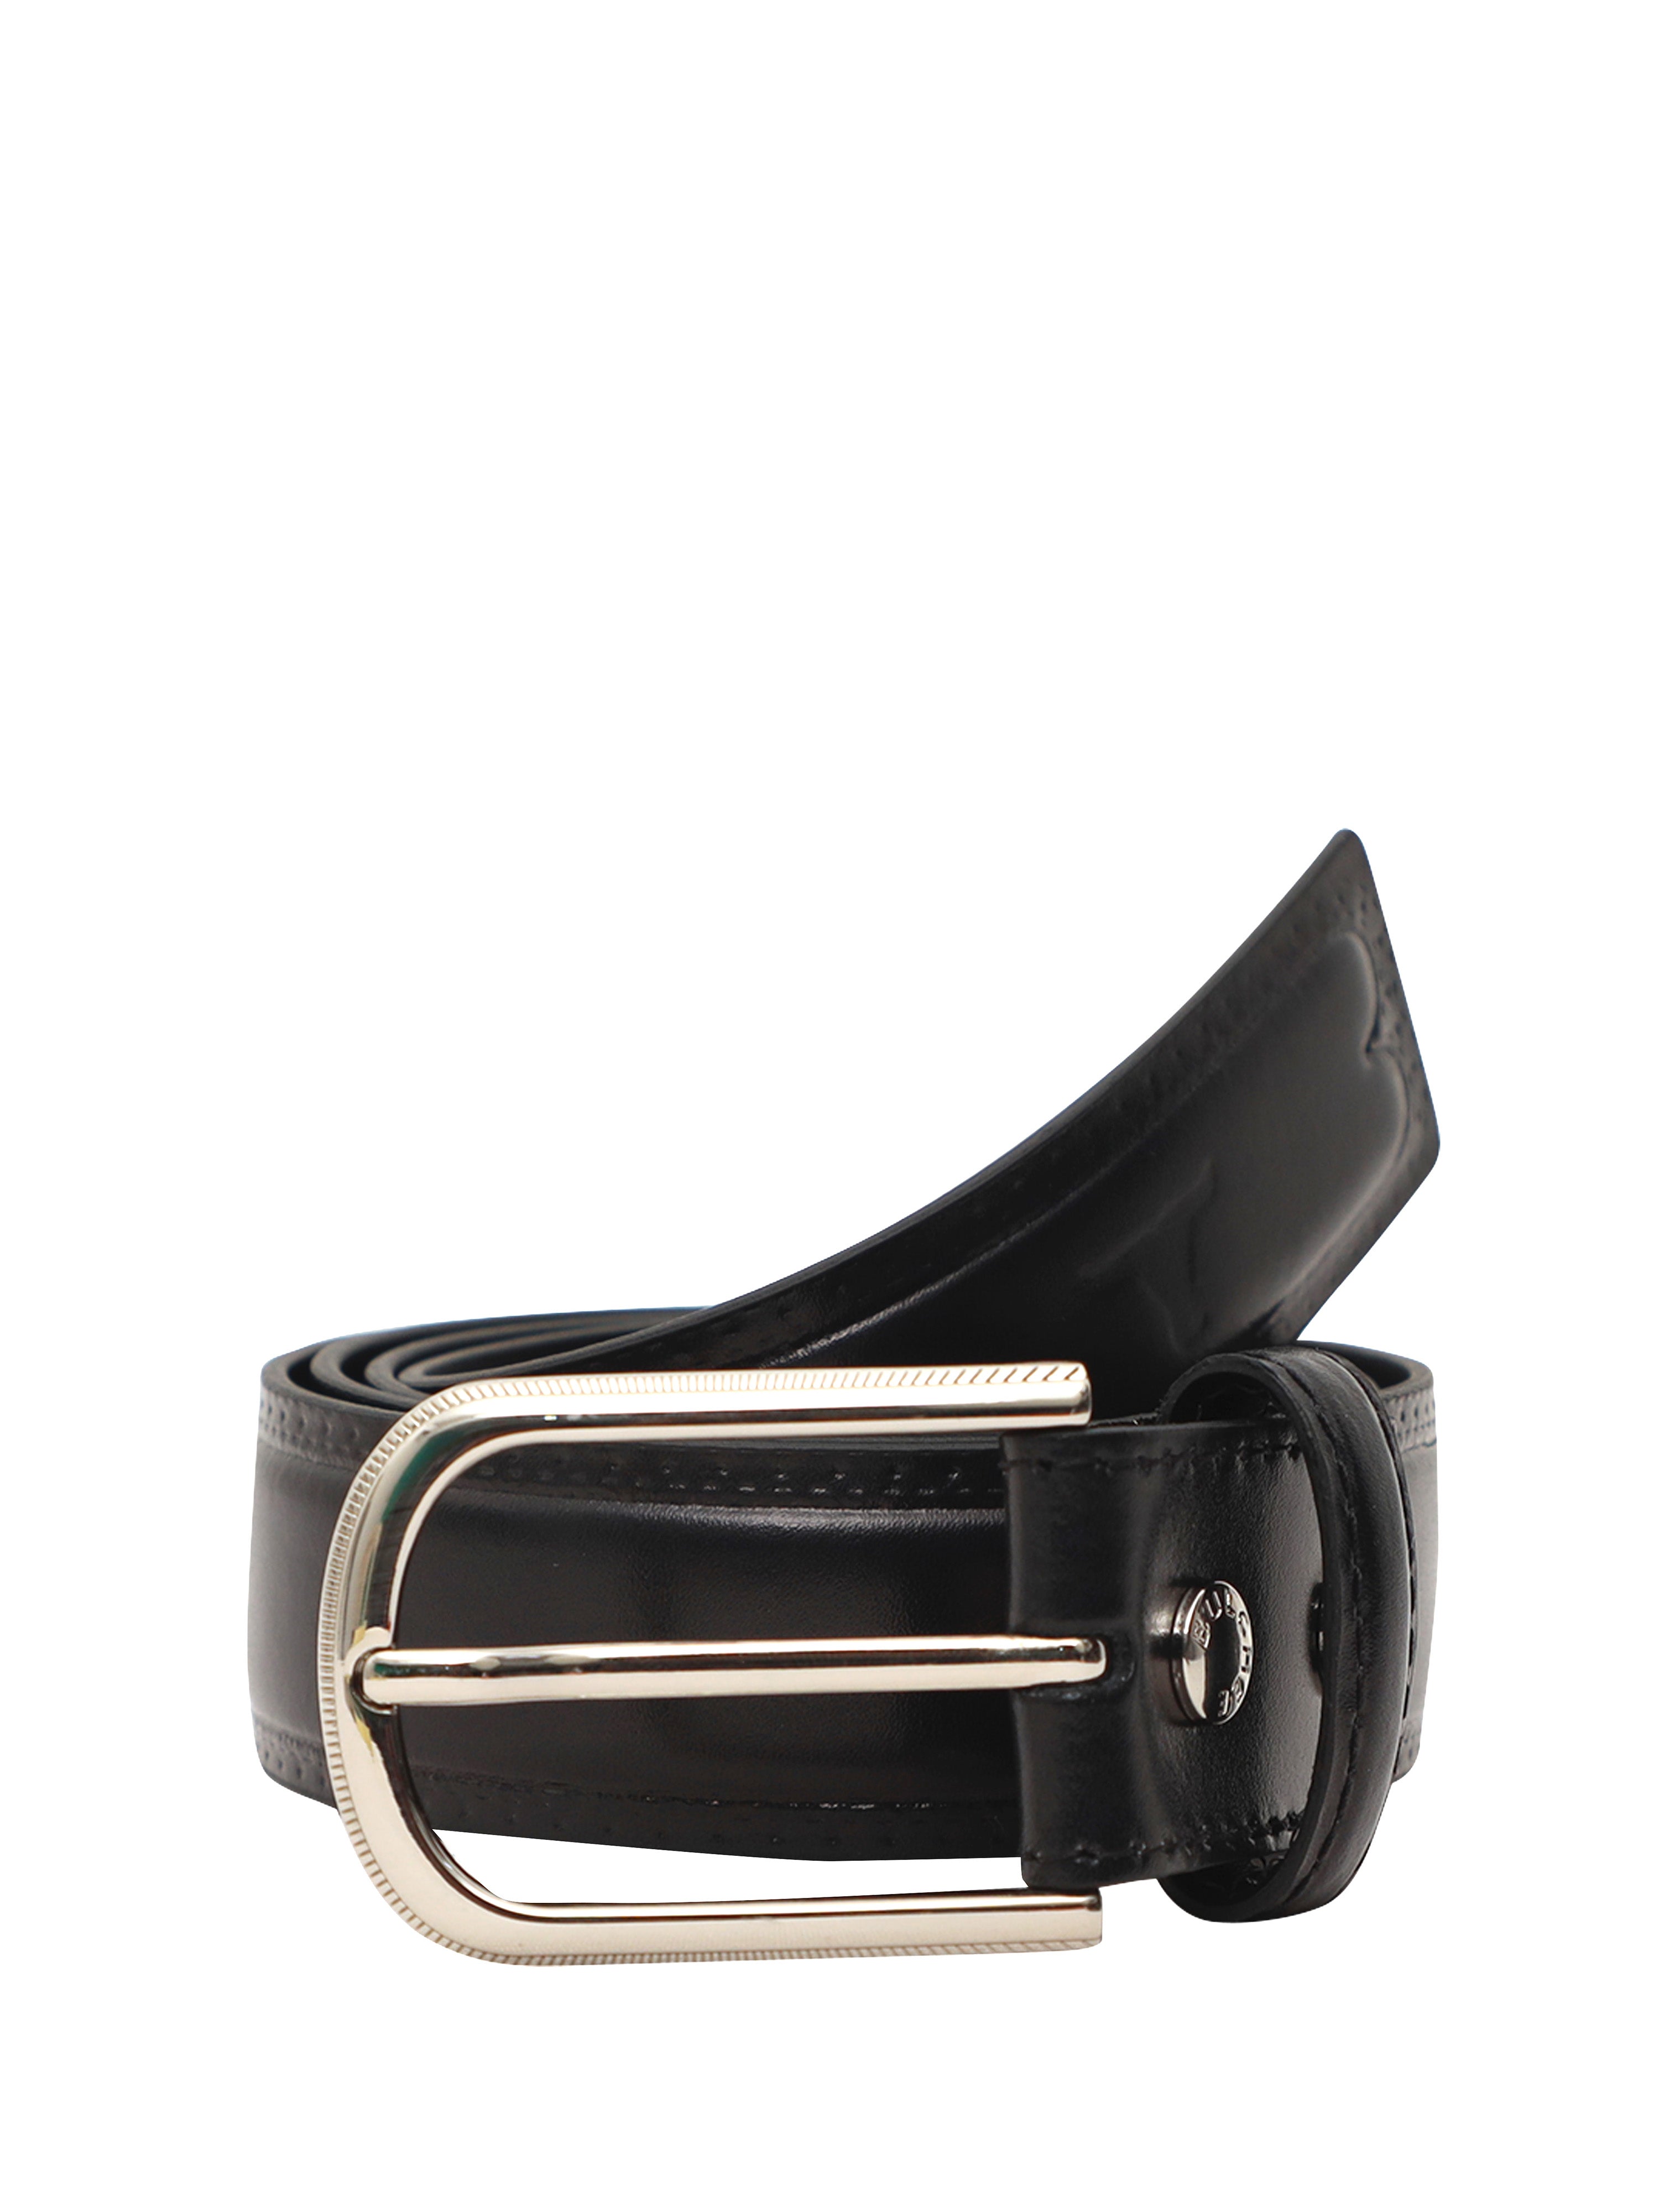 Bulchee Premium Collections Men's Genuine Leather Belt | Padded Chino | Black